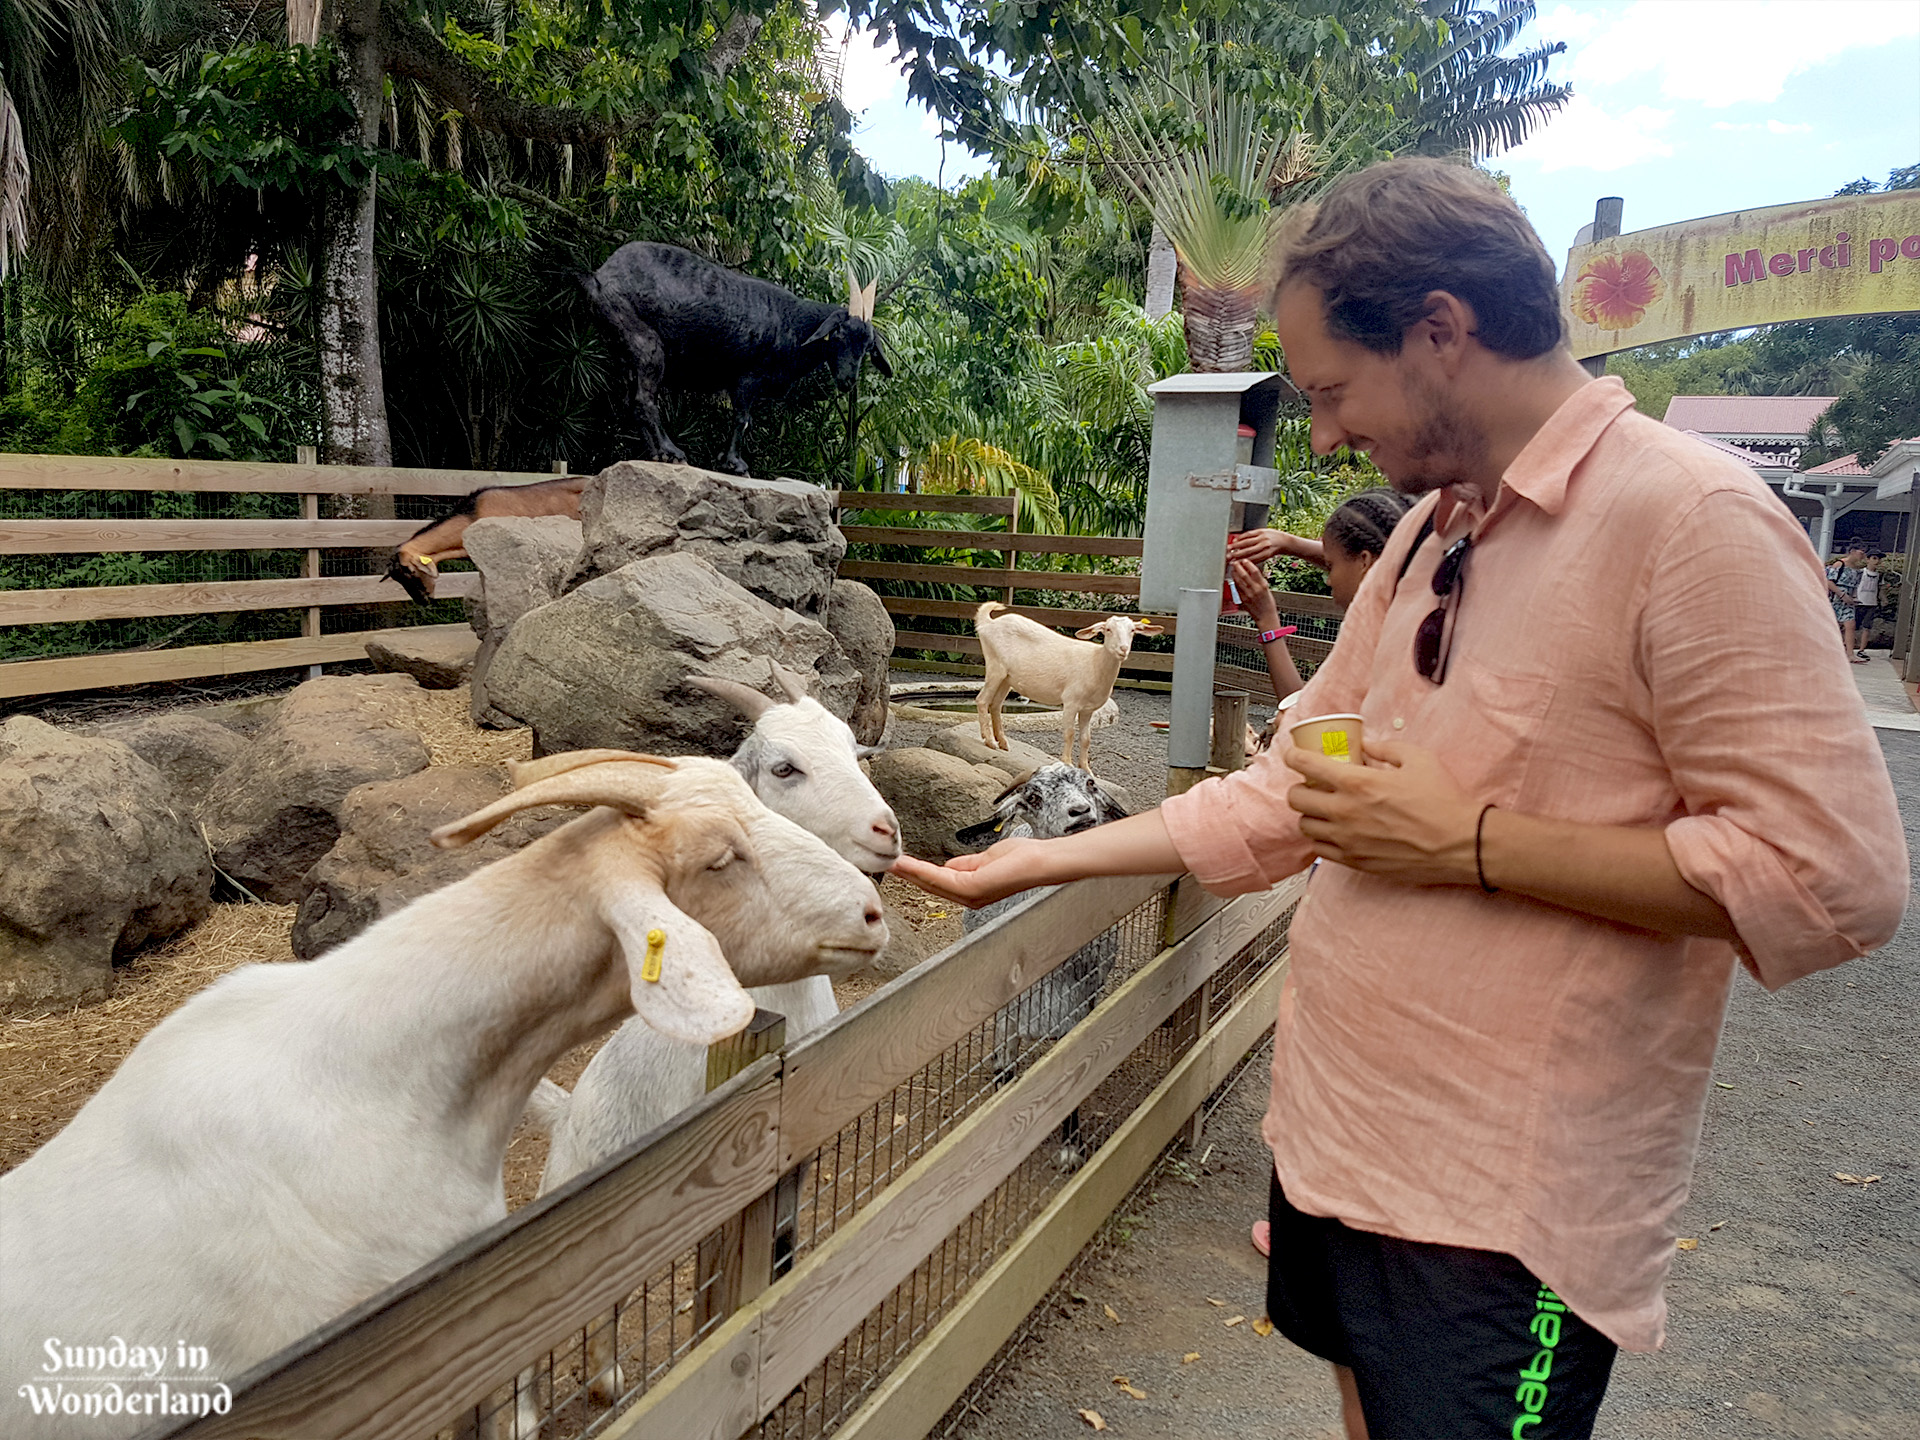 A man feeding goats in Botanical Garden in Deshaies in Guadeloupe - Sunday in Wonderland Blog